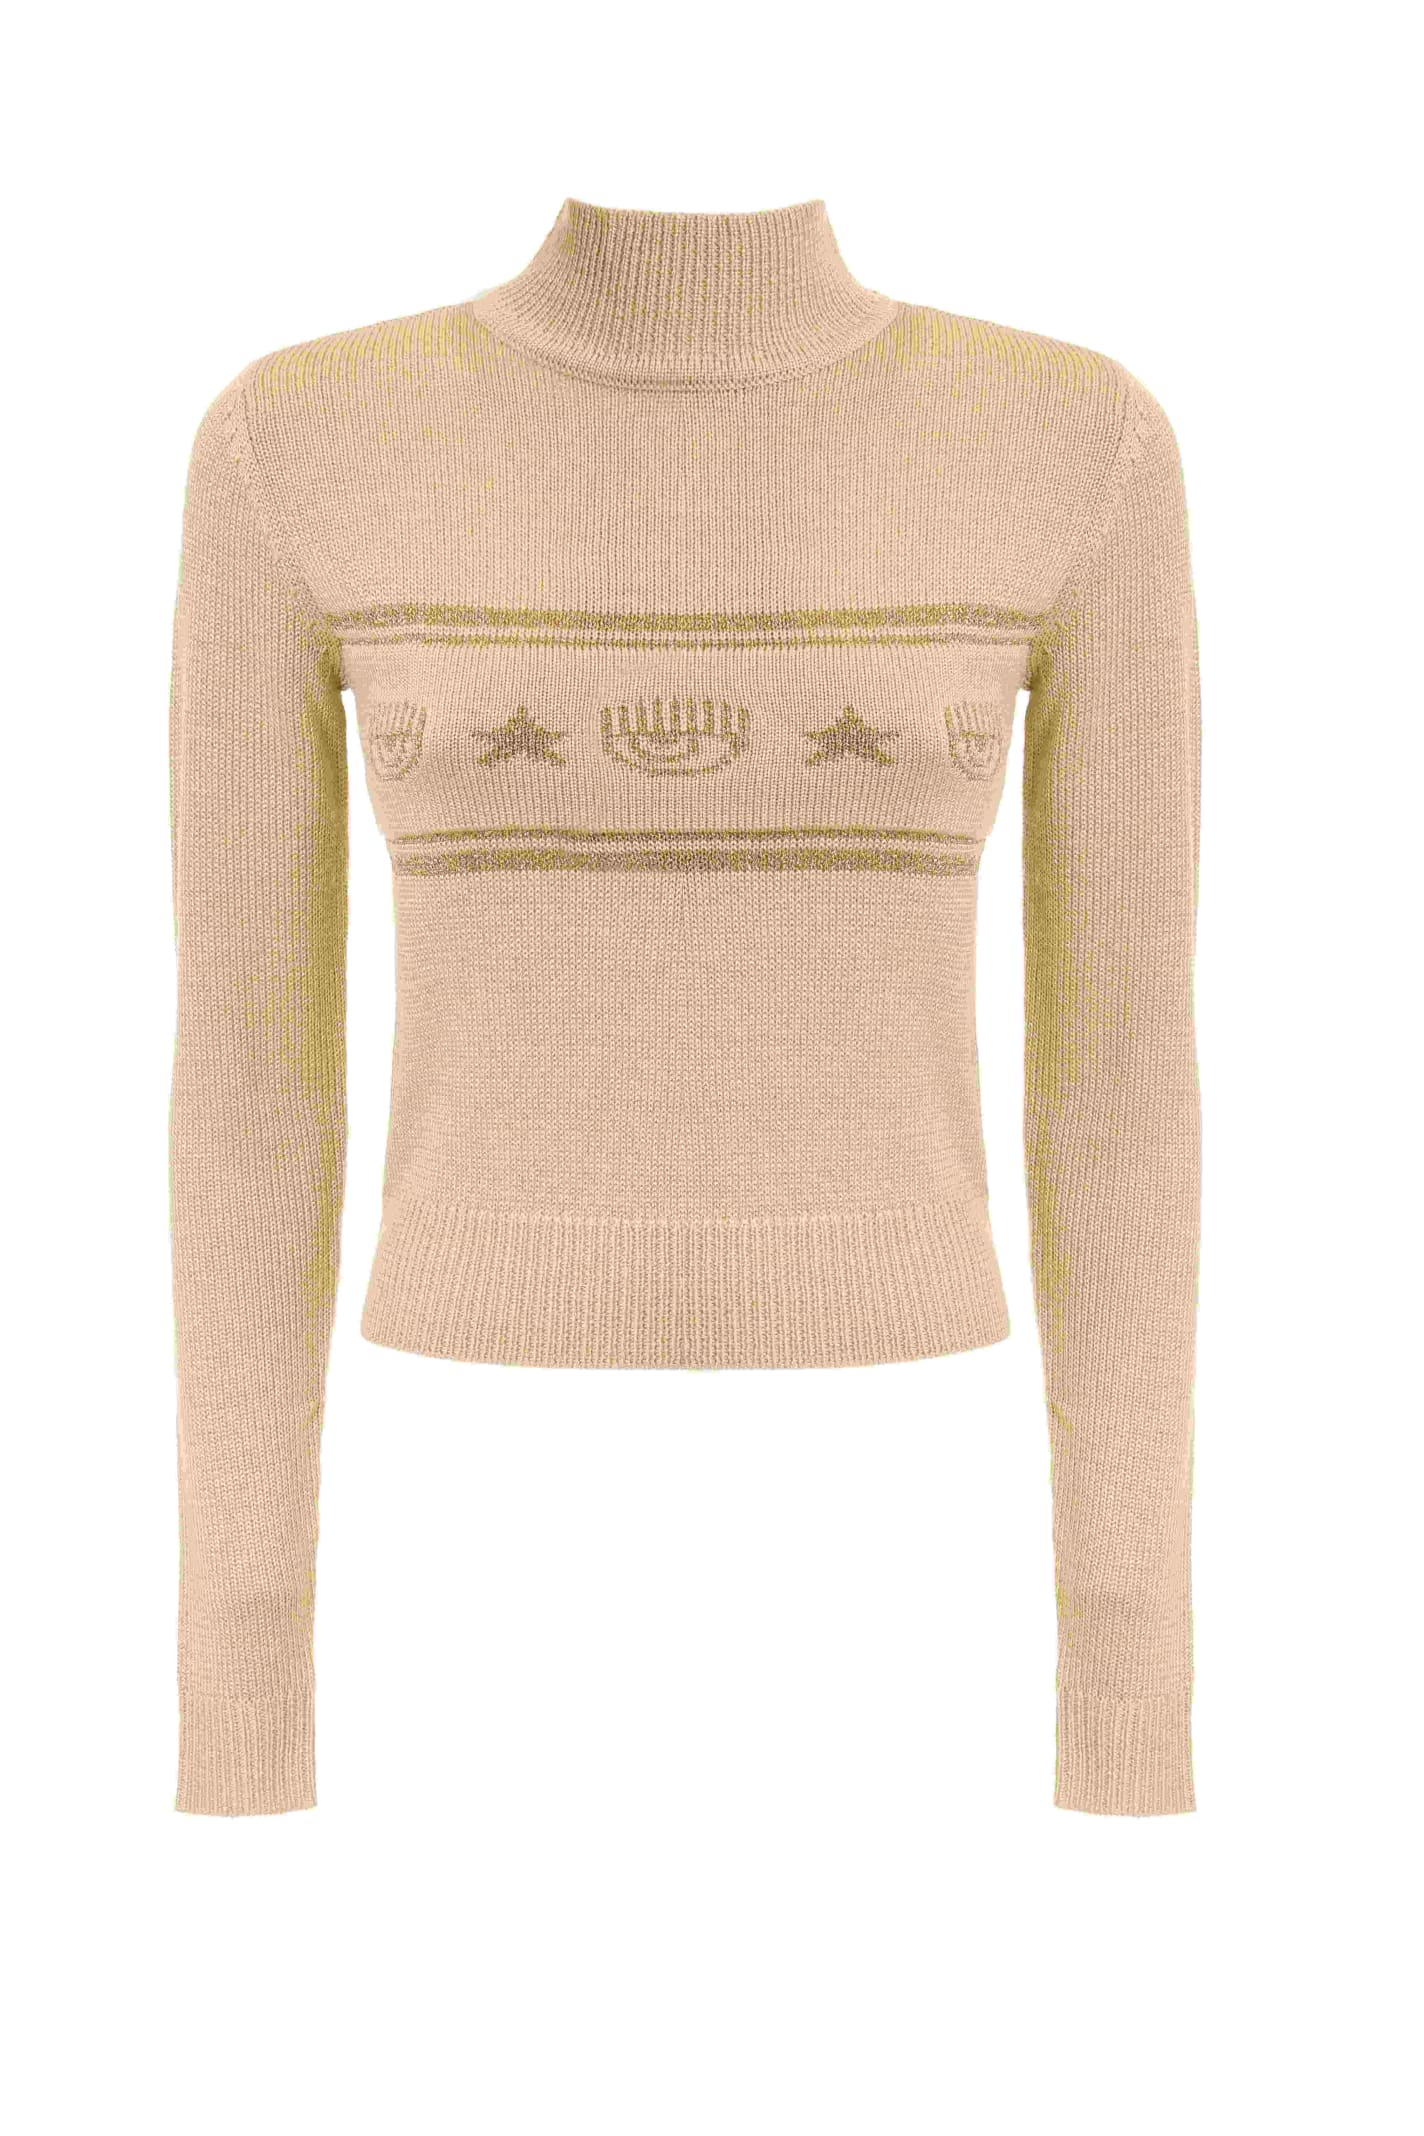 Shop Chiara Ferragni Sweaters Golden